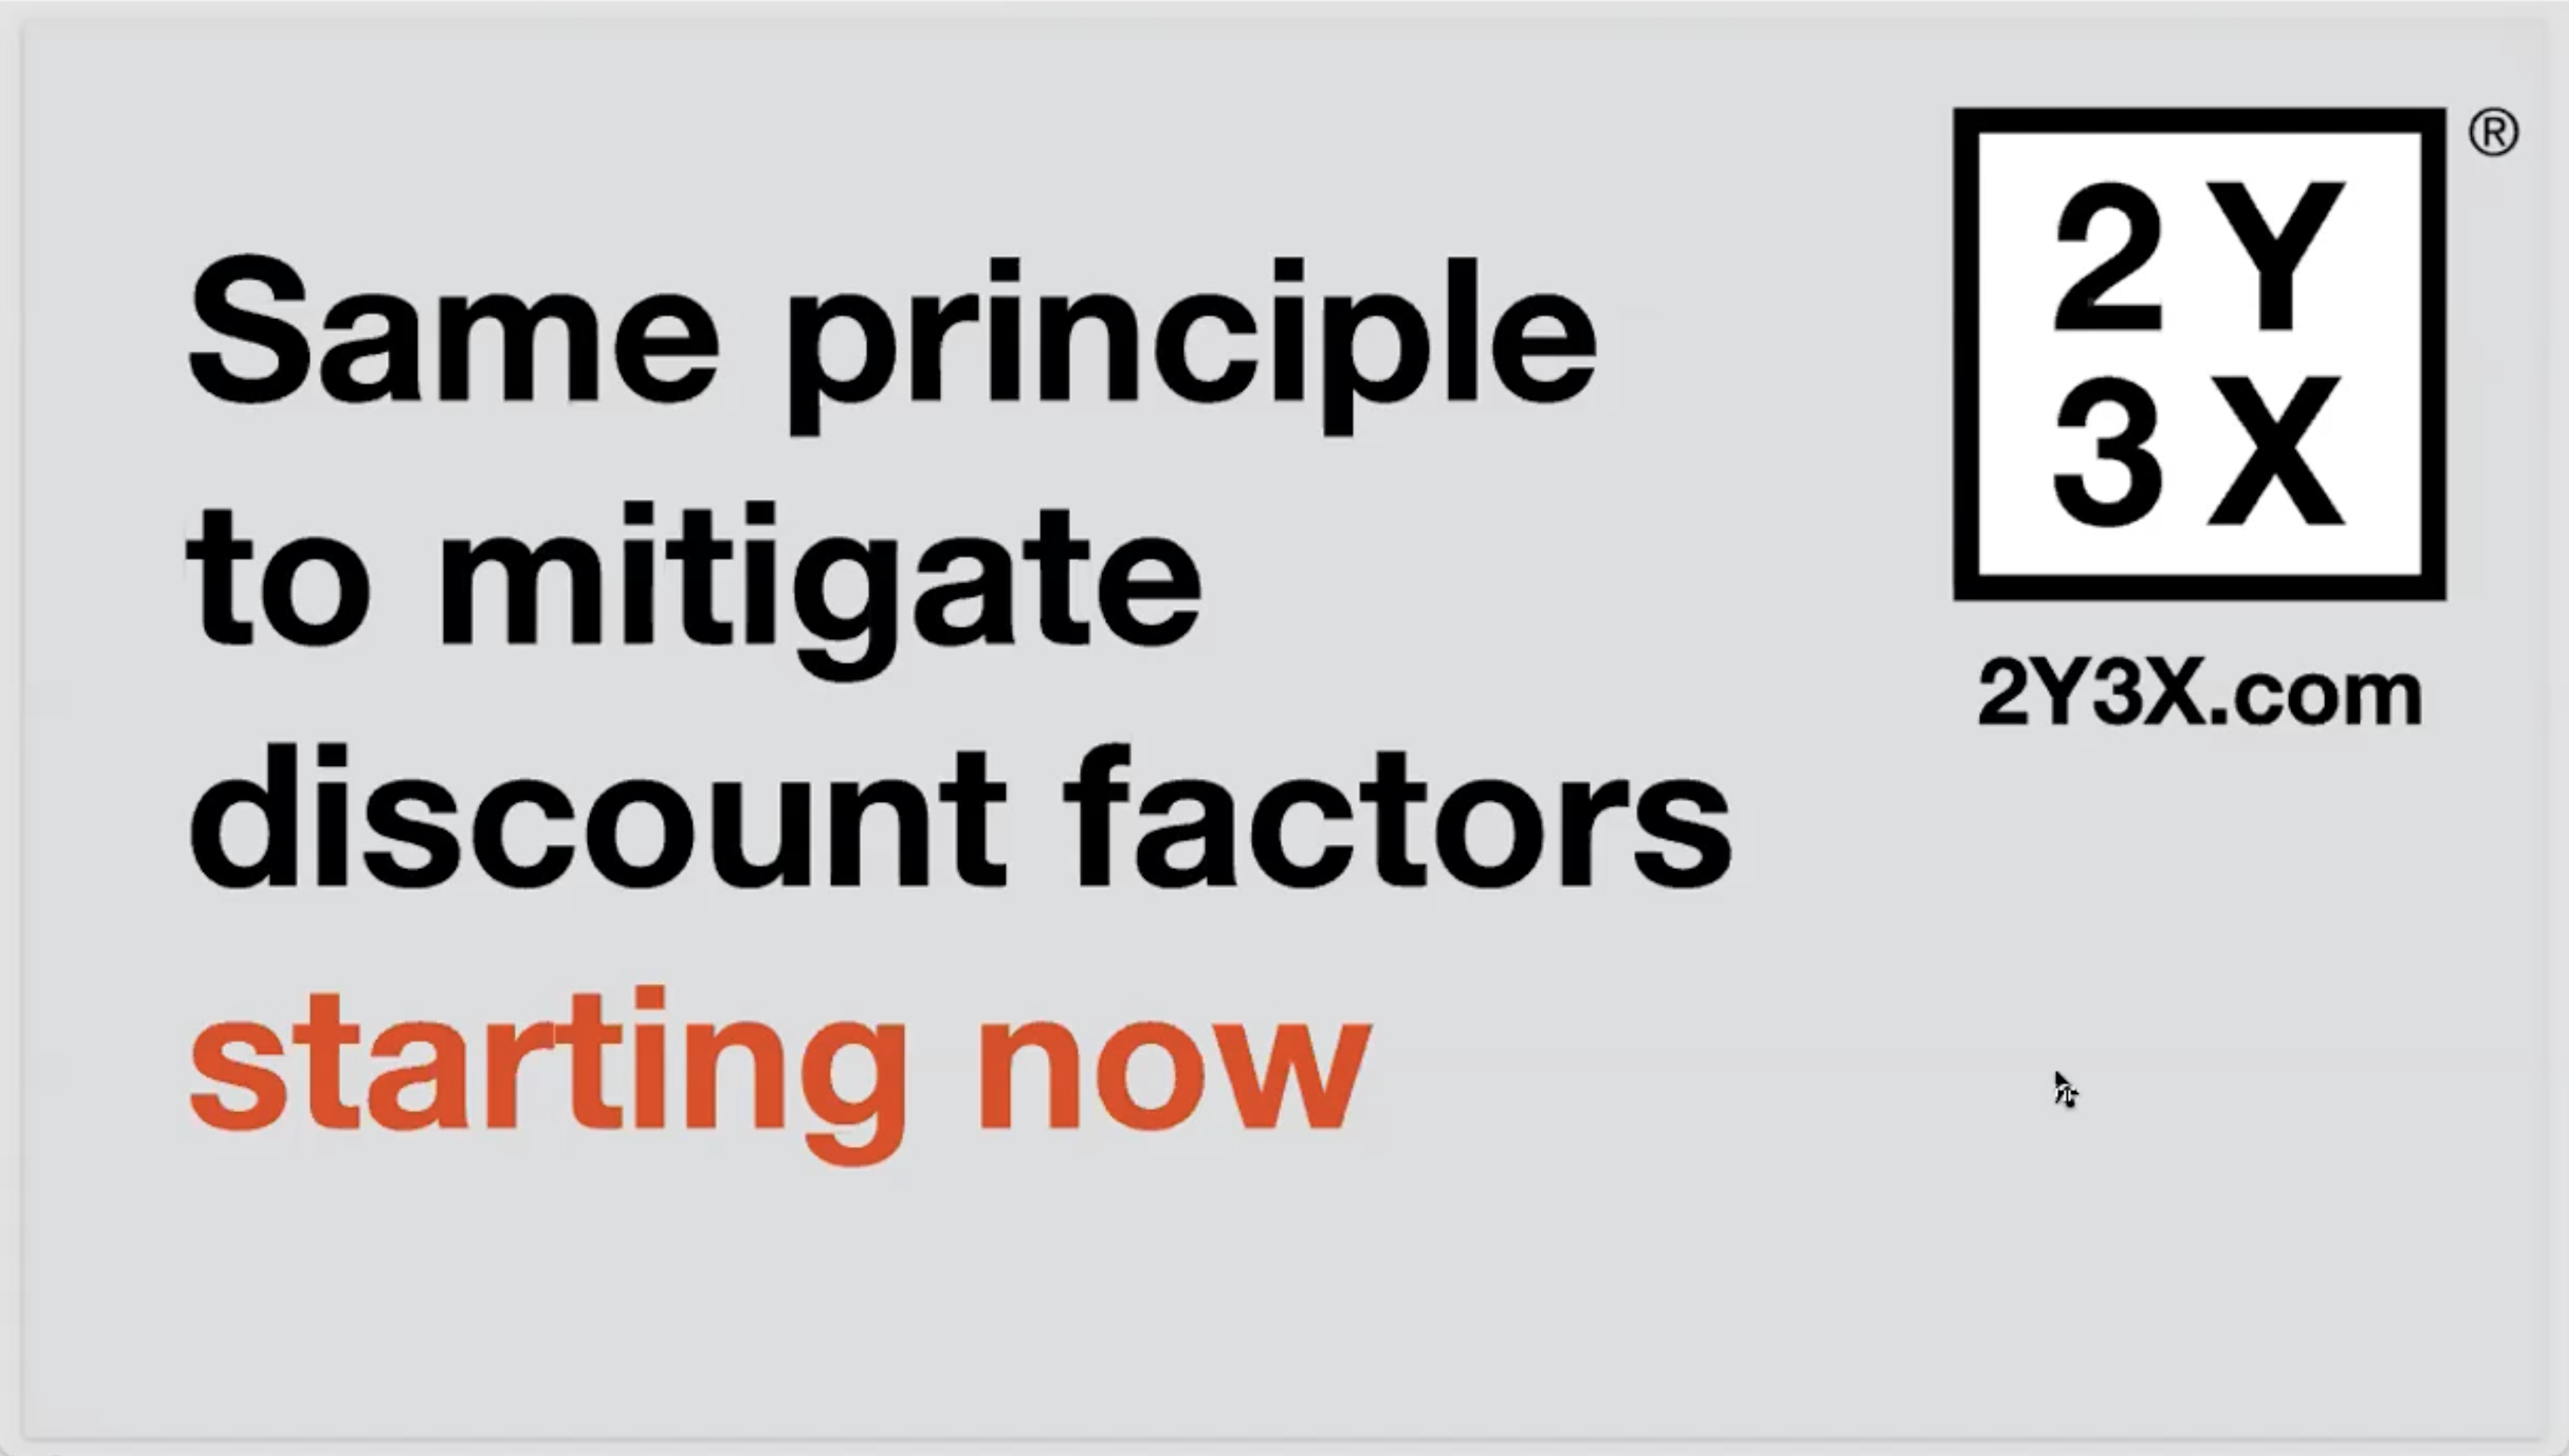 Principles to mitigate discount factors